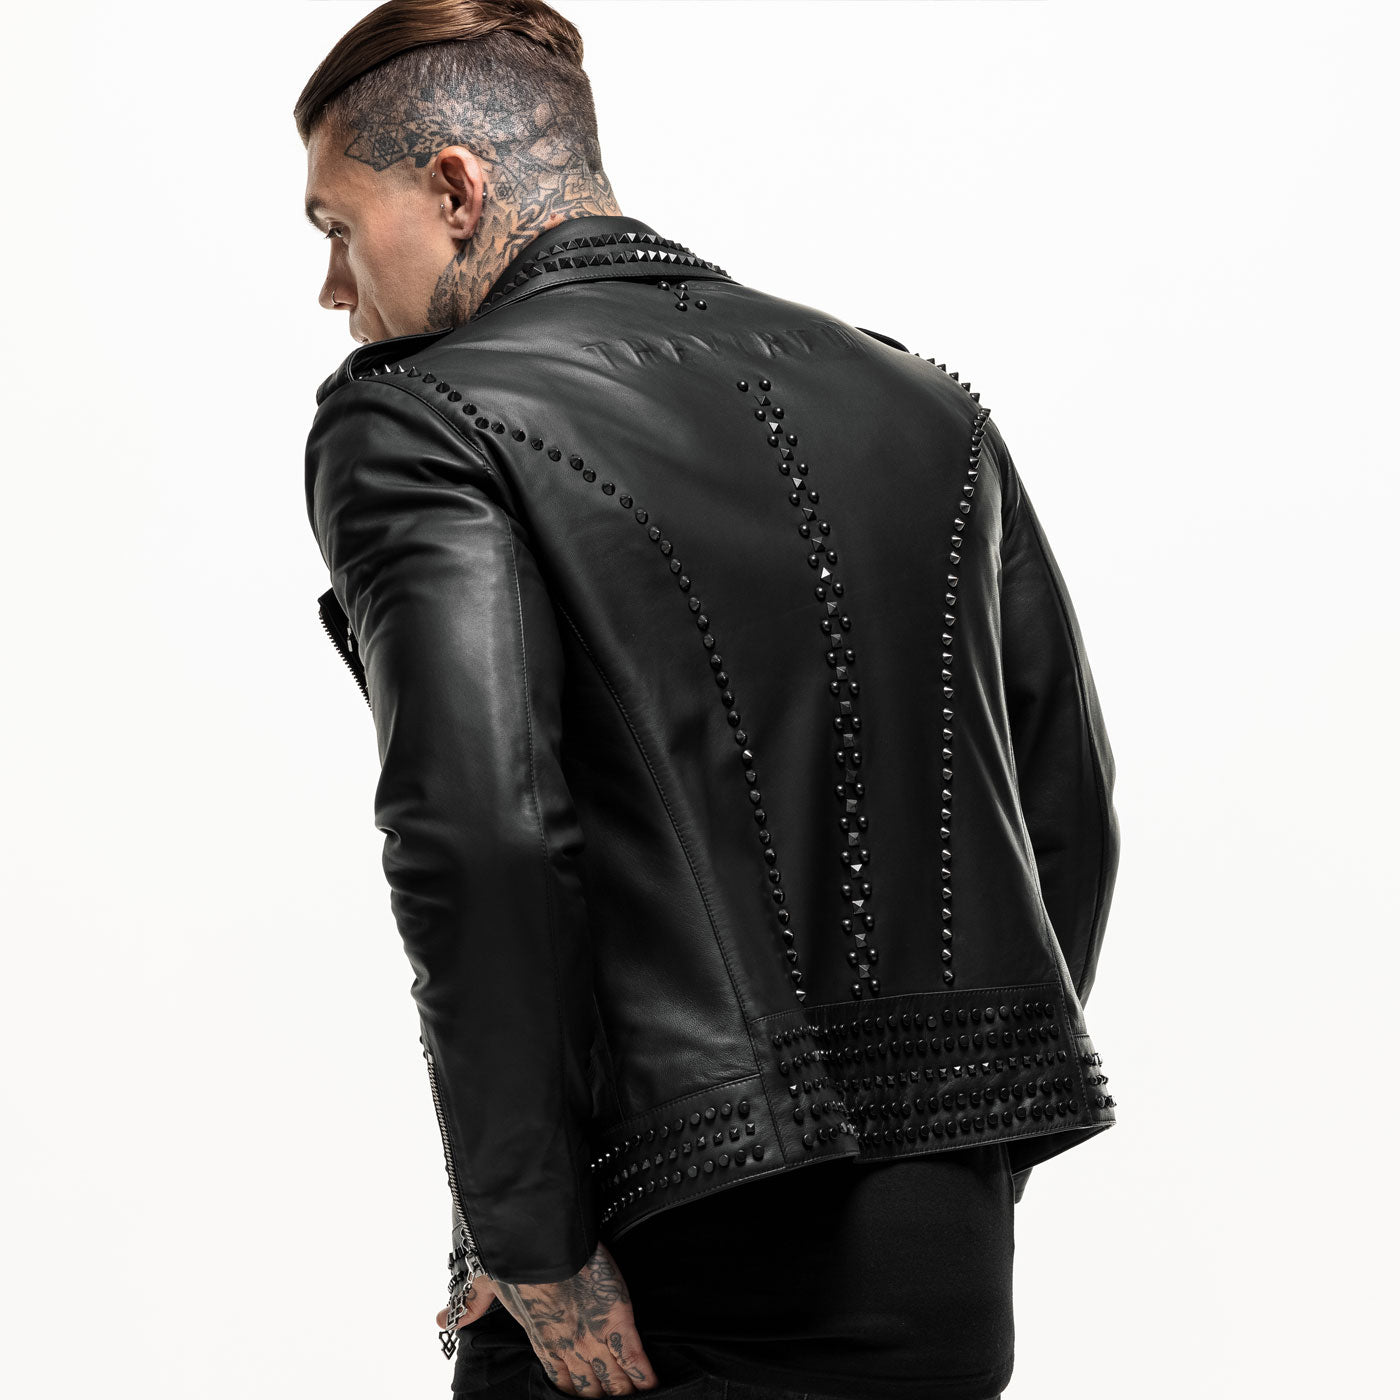 Biker Leather Jacket with Zipper Sleeves | Jacket for Women | Kilt and Jacks